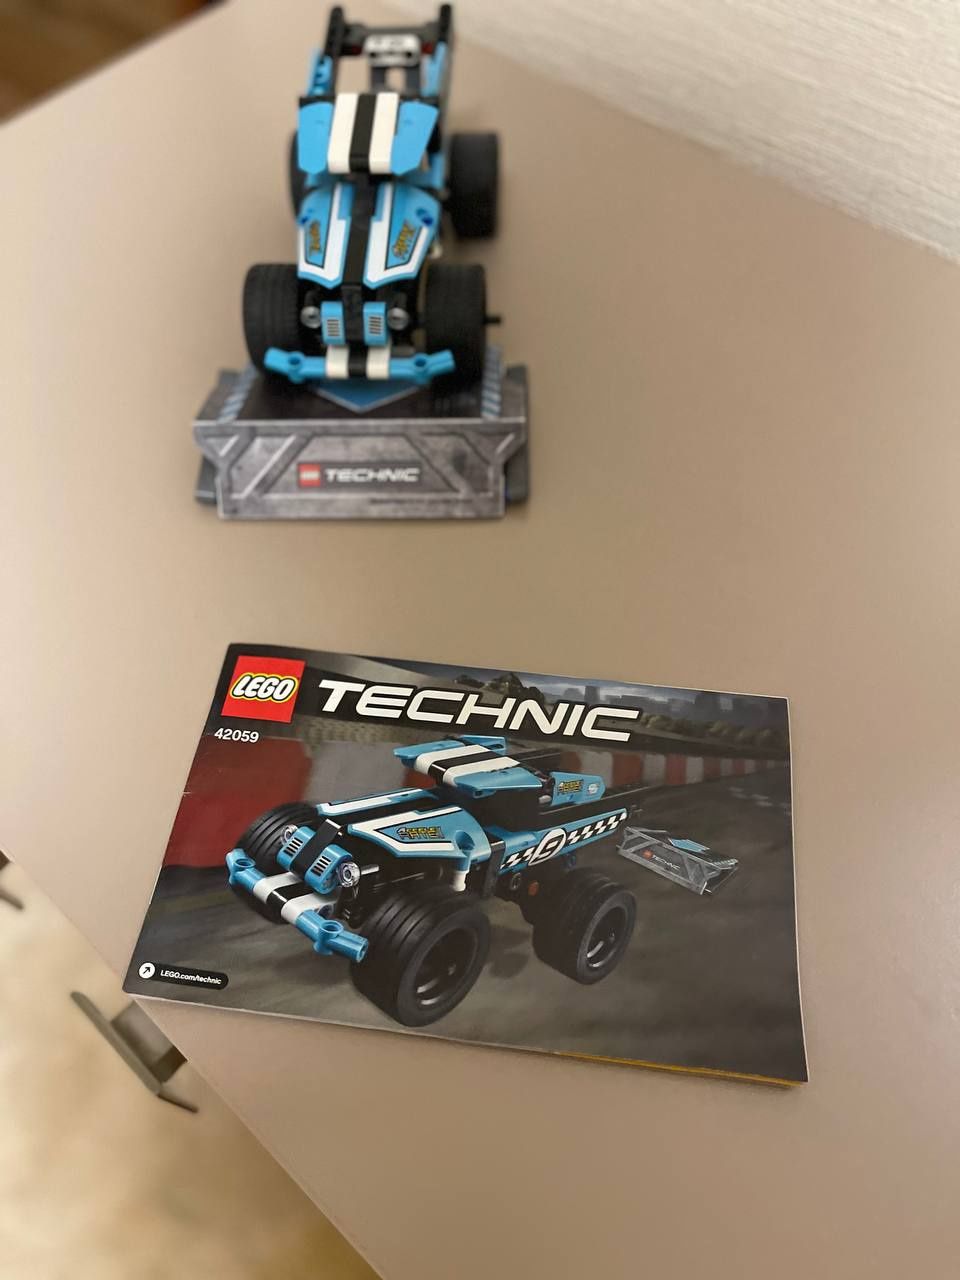 Lego Technic 
42059